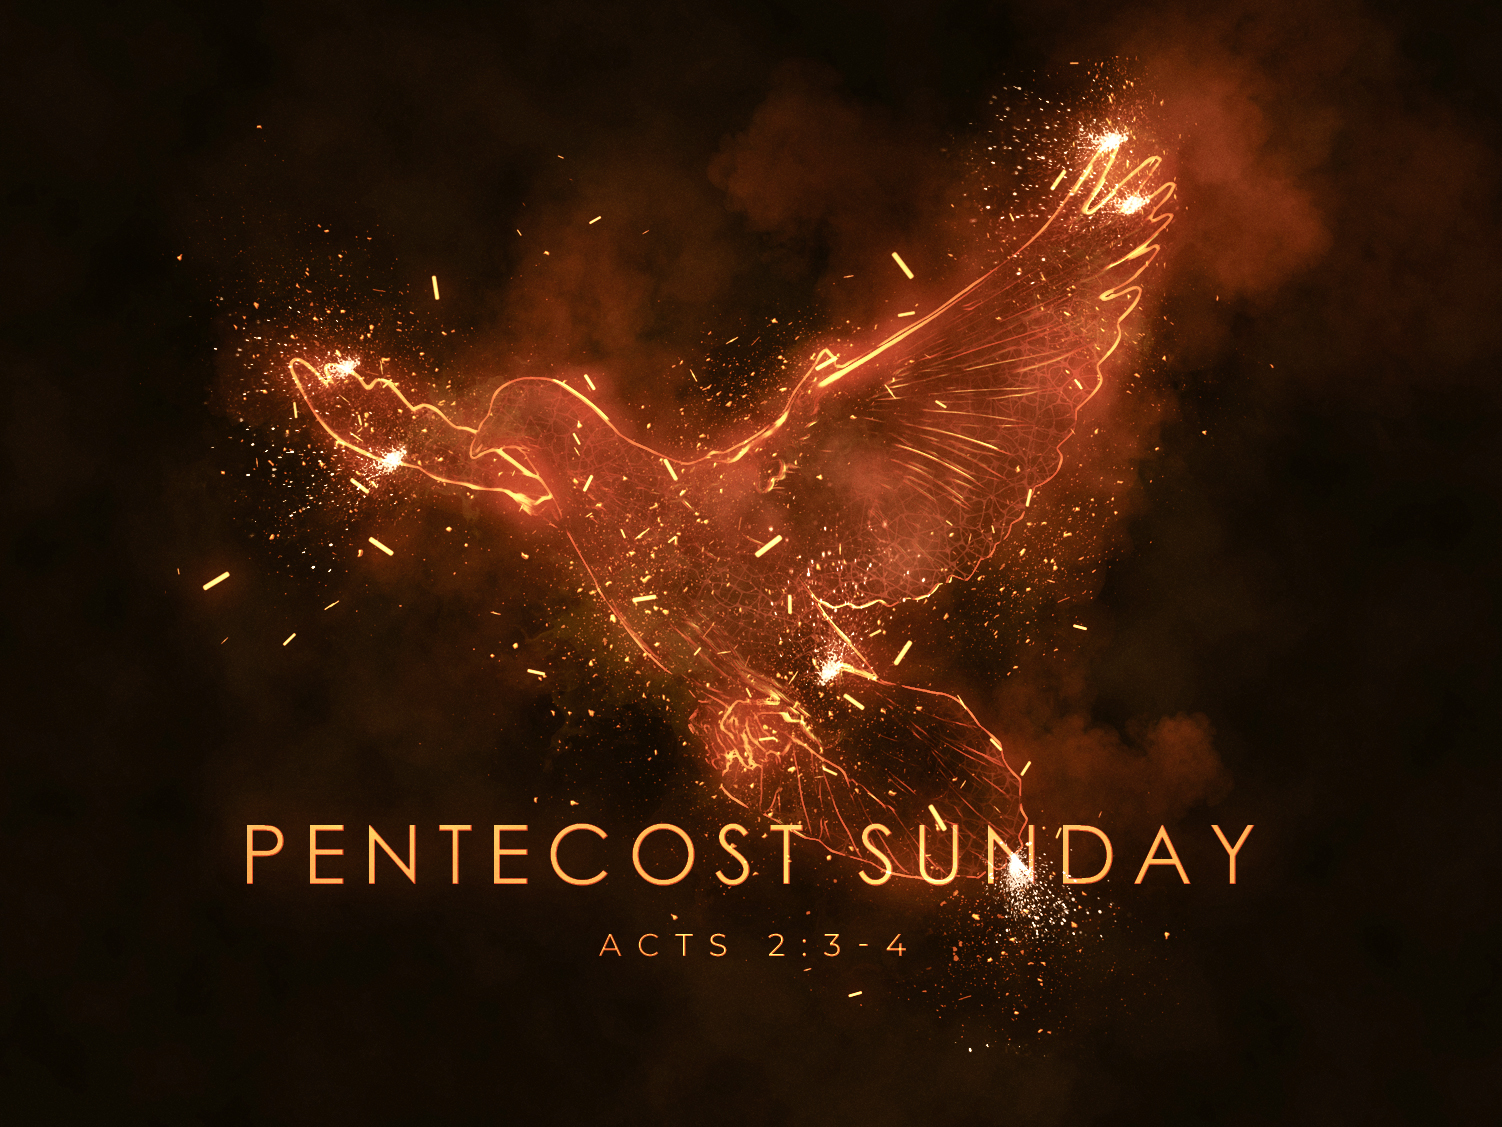 "What is Pentecost Sunday?" New Cedar Grove Missionary Baptist Church